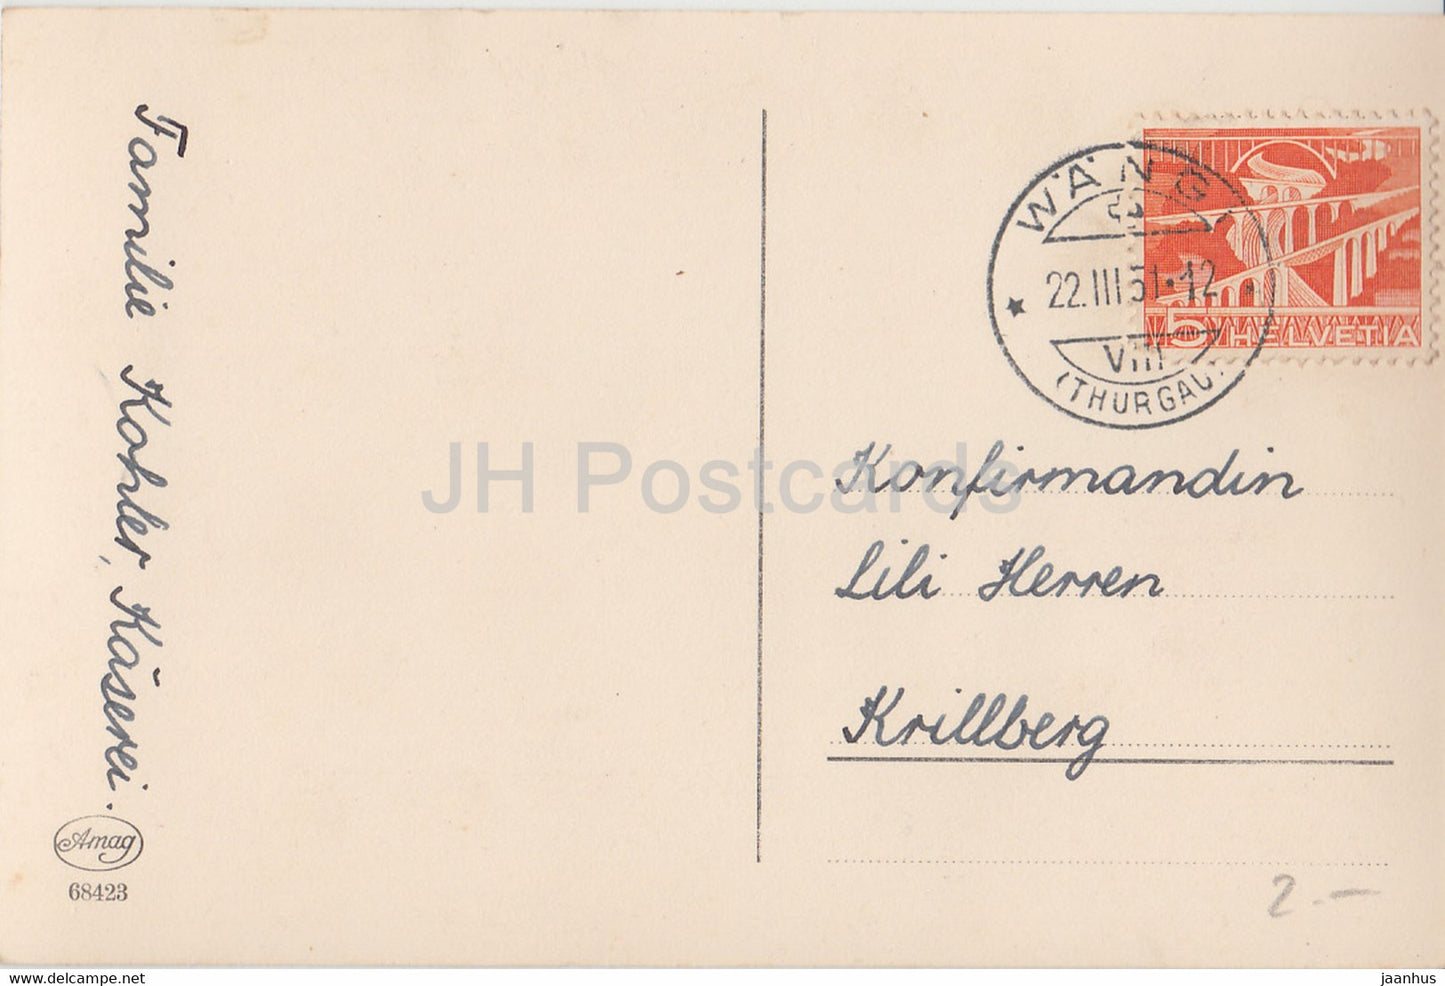 Carte de vœux - Die Besten Gluckwunsche zur Konfirmation - œillet - fleurs - 1951 - carte postale ancienne - Allemagne - utilisé